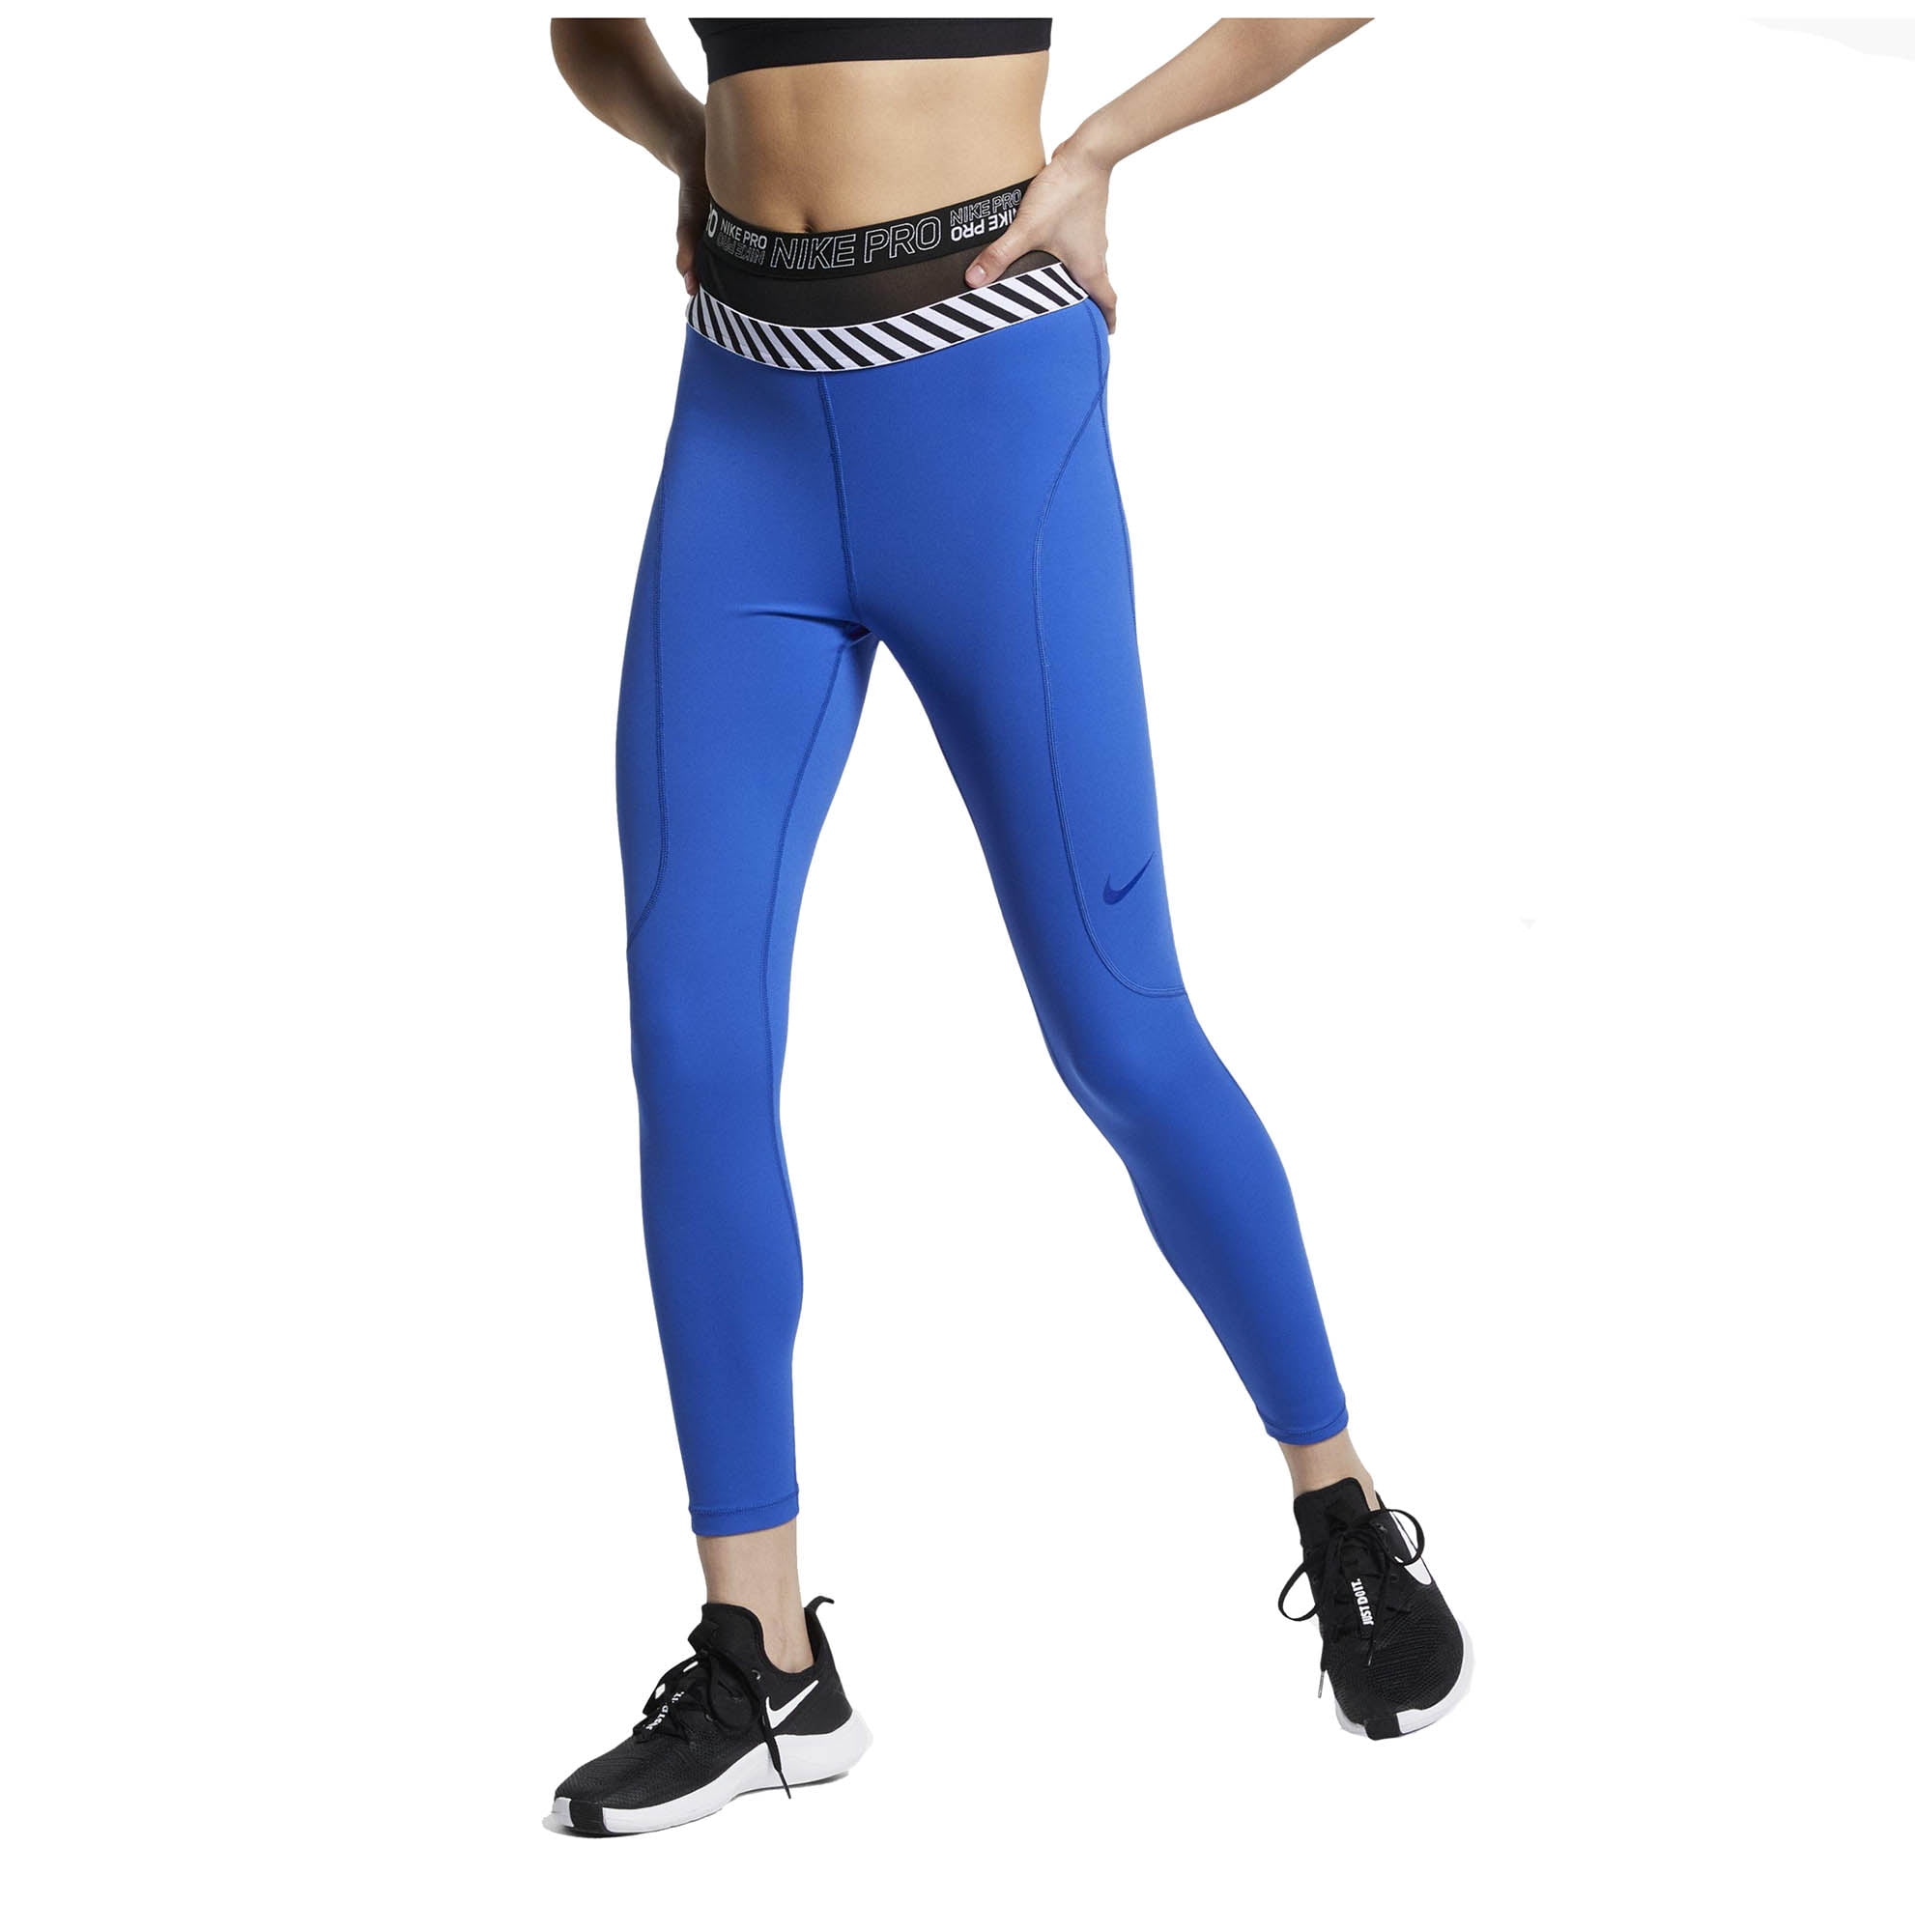 público Redundante norte Nike Women's Pro Hypercool 7/8 Training Pants (Game Royal/Black, Small) -  Walmart.com